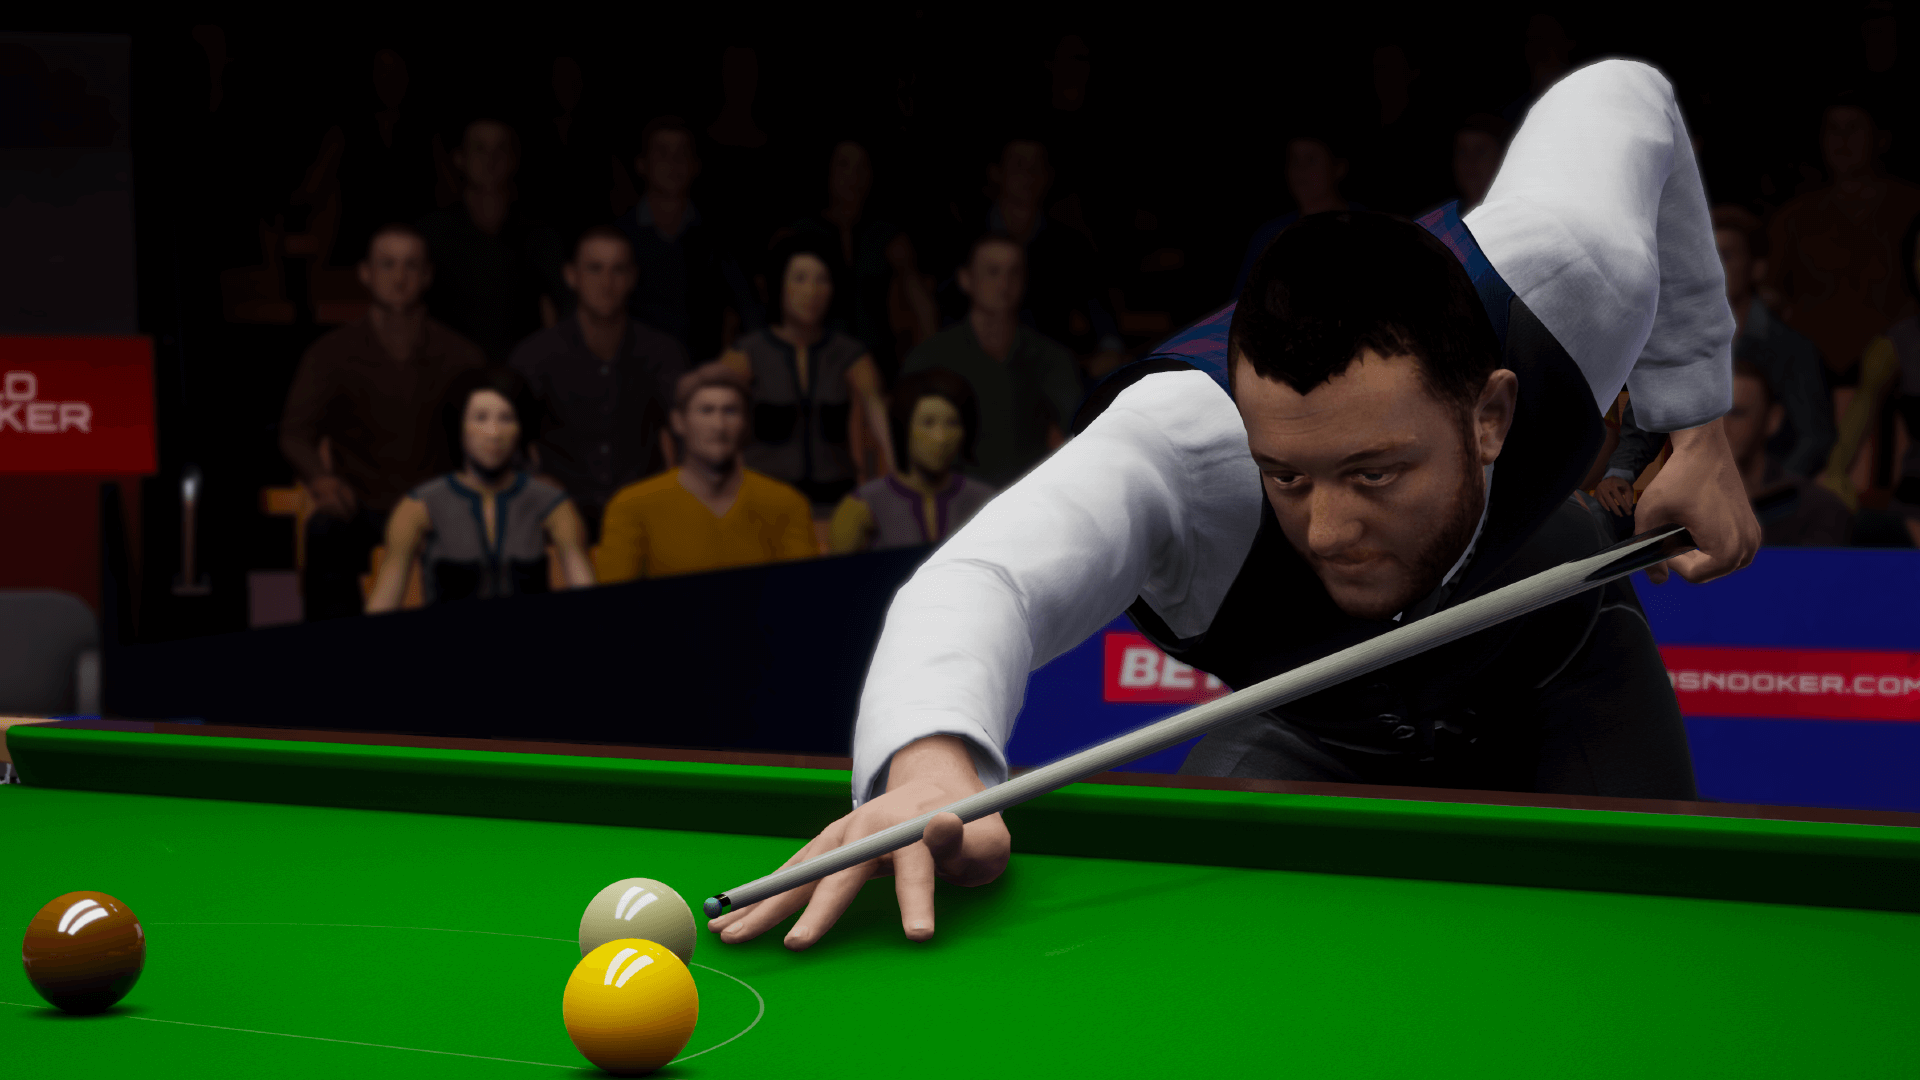 Snooker 19 — Master stroke